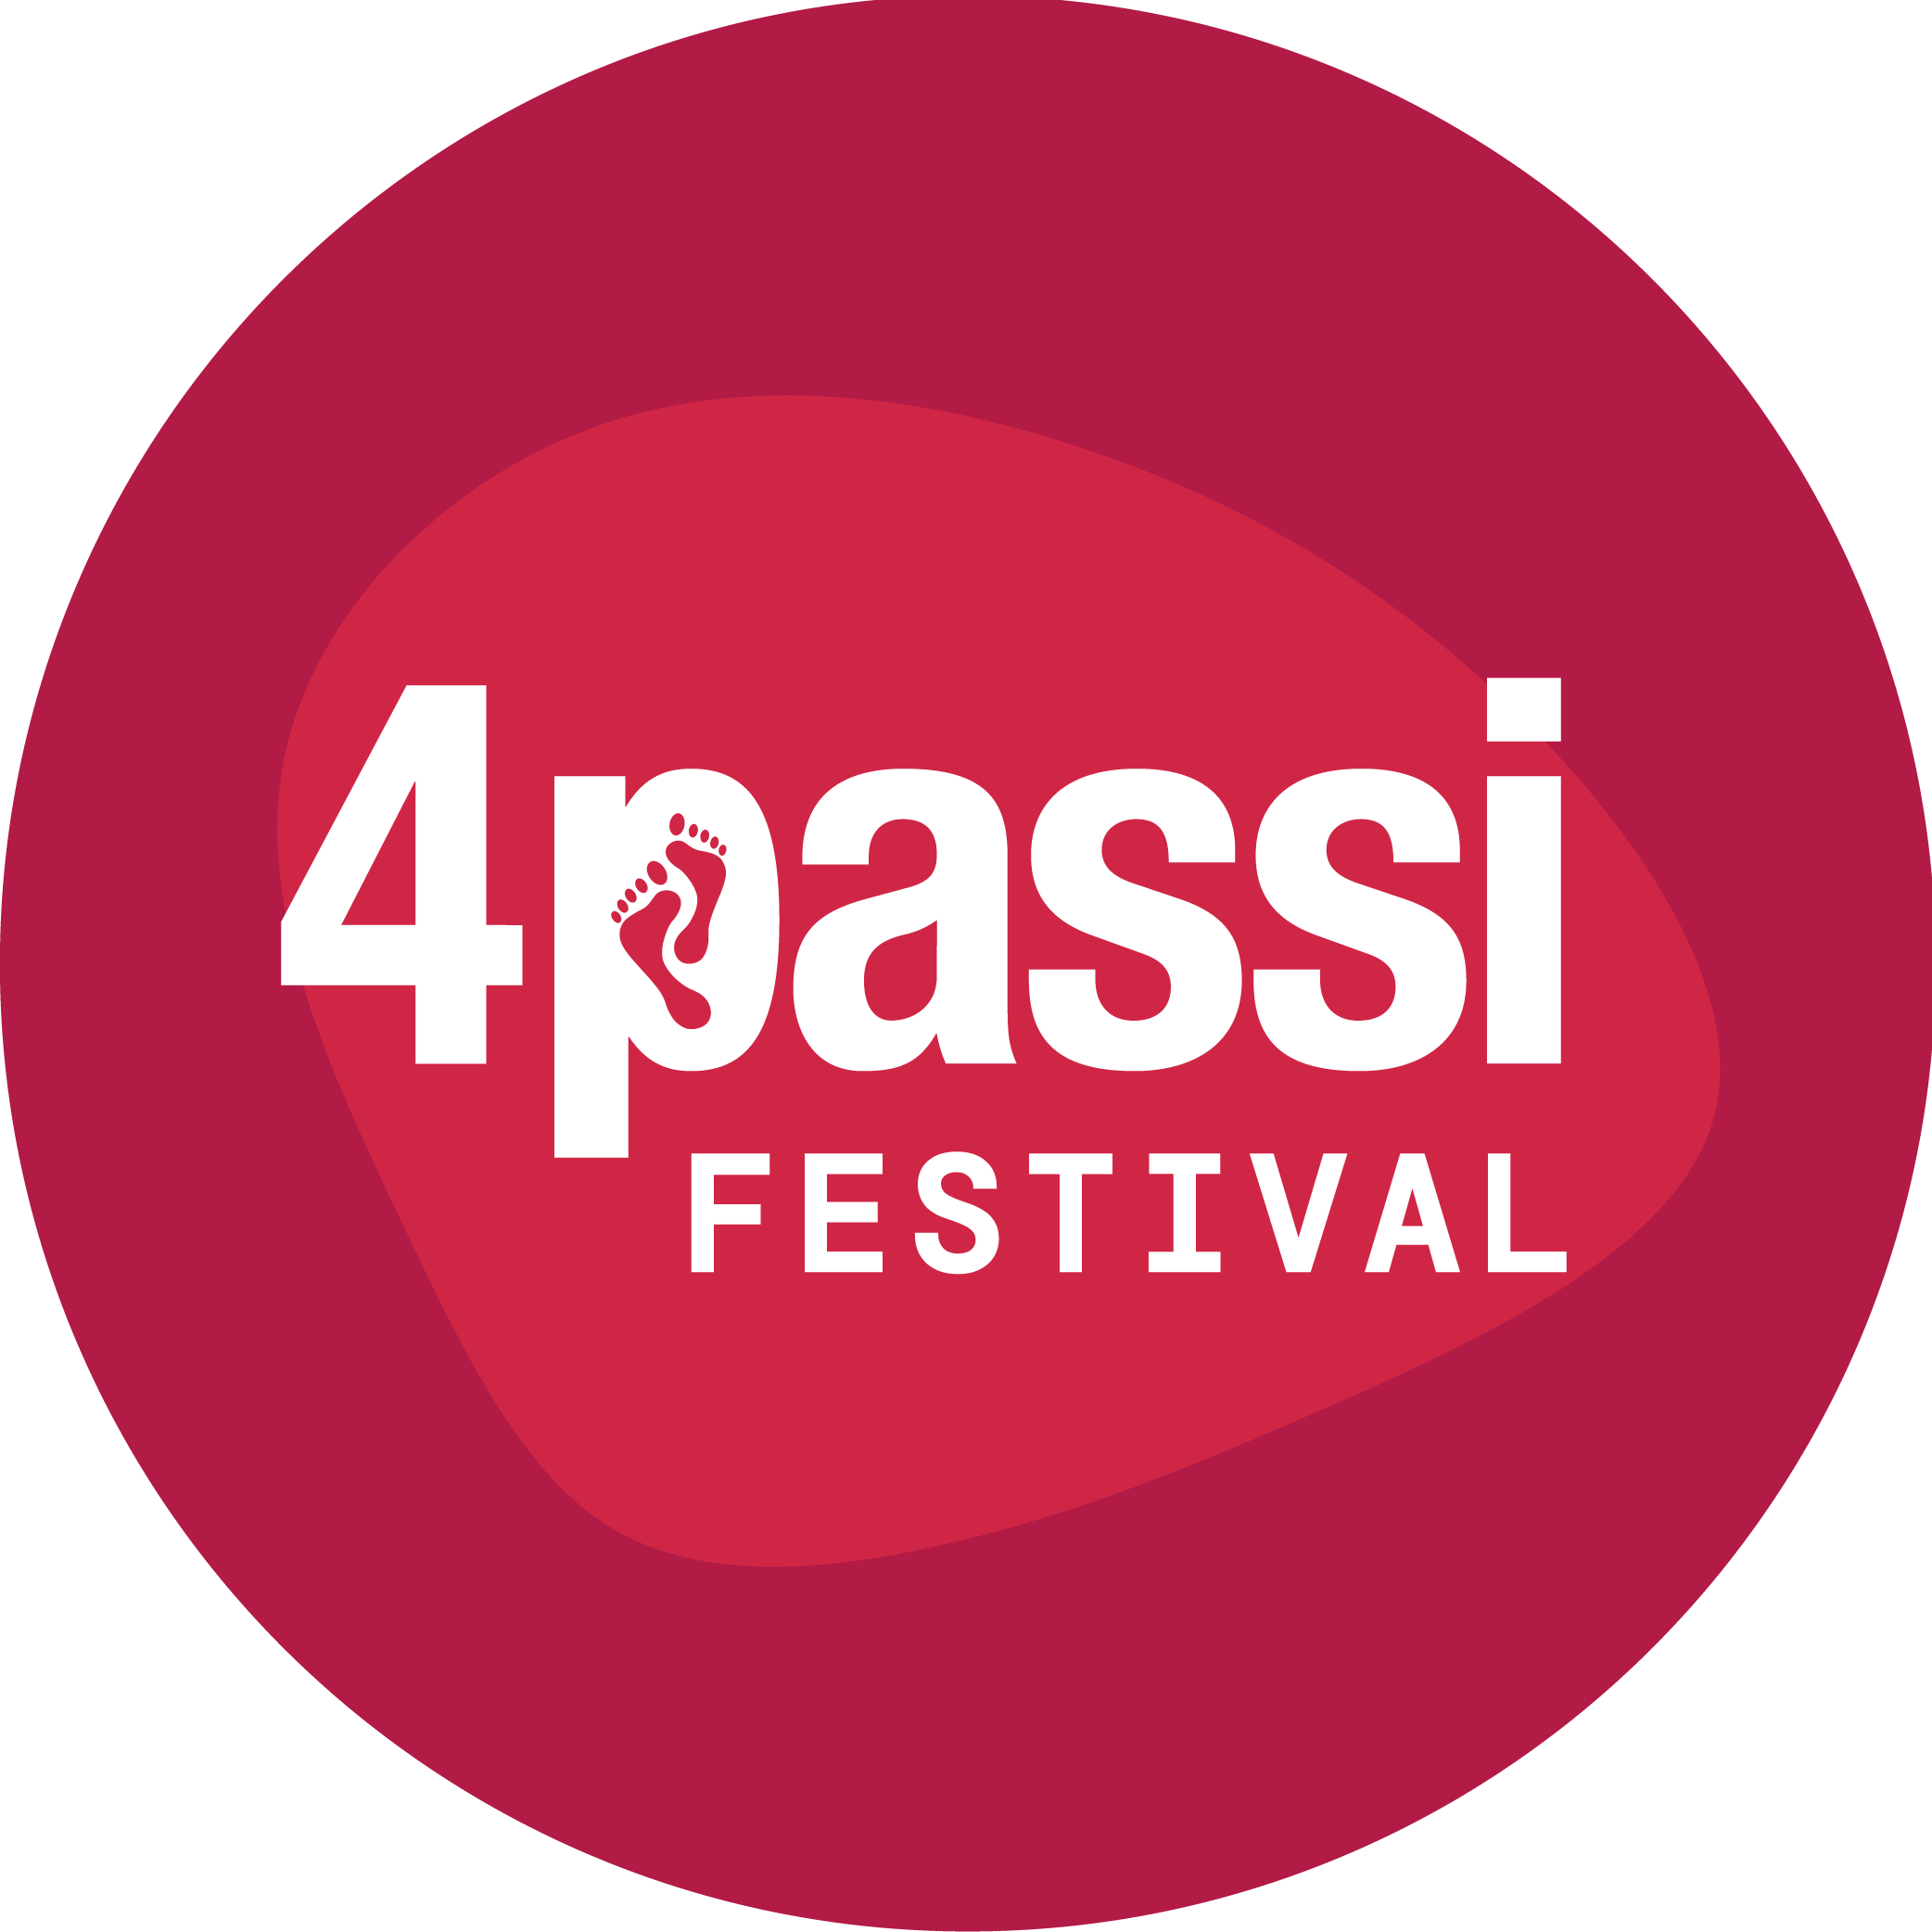 https://combinazionifestival.it/wp-content/uploads/2022/08/Logo_01_Esteso_colore-1-2084x2084.png